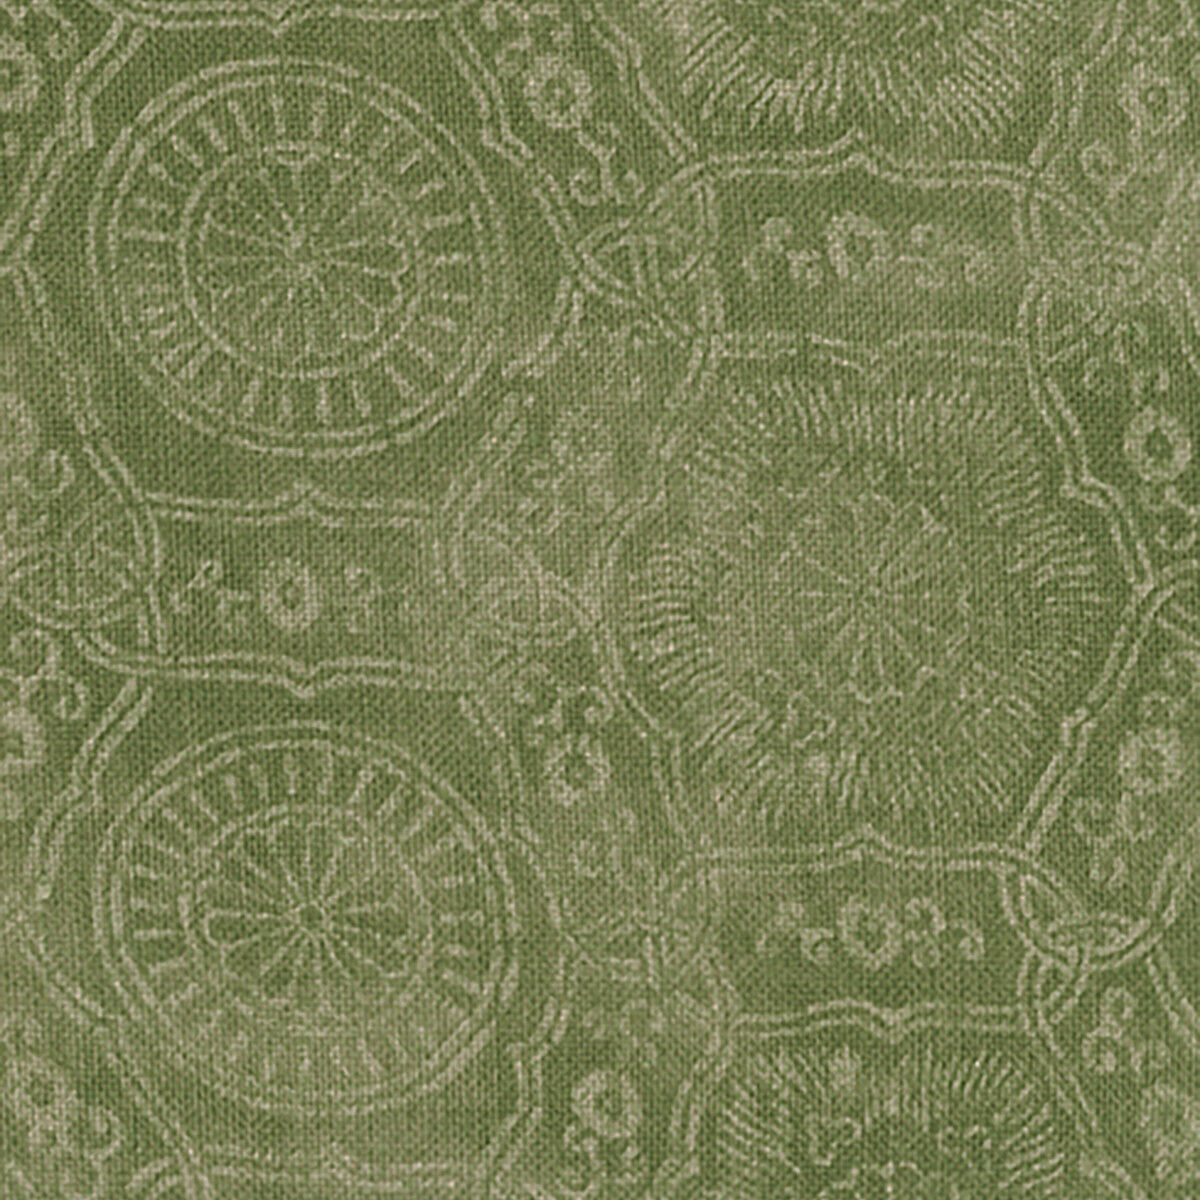 Katie Leede Green Linen Upholstery Fabric- Kimono Negative Arugula 5.50 yd KN-04